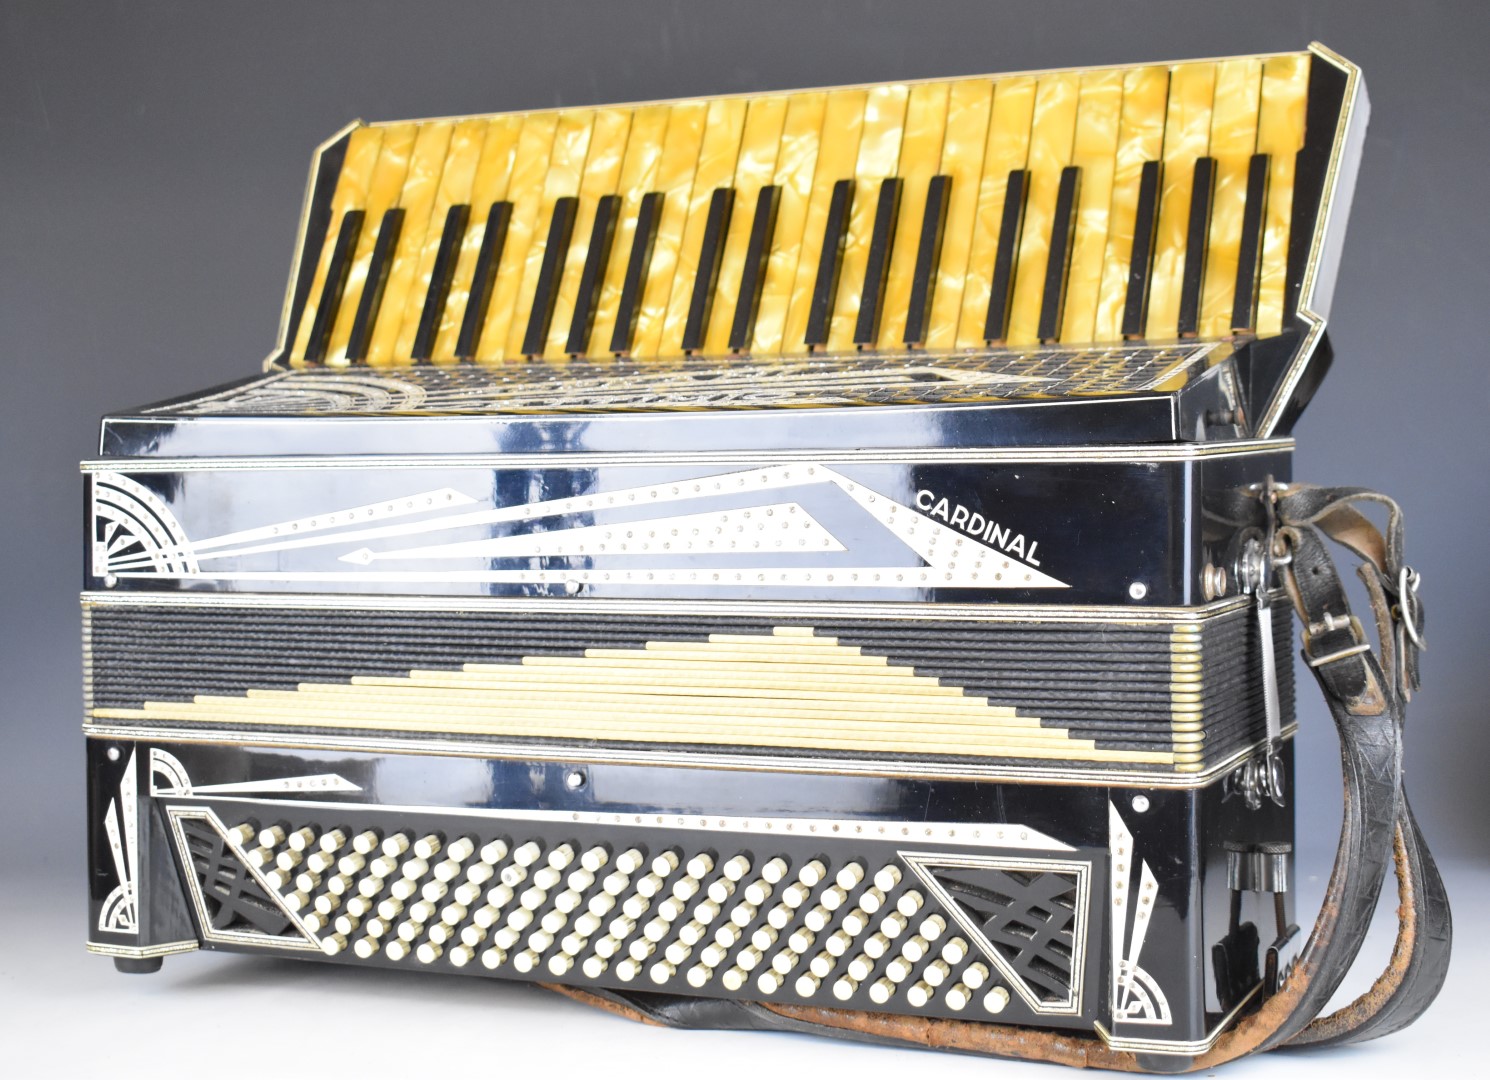 Soprani Settimio 41 key piano accordion in black/gem finish, with fitted hard case.